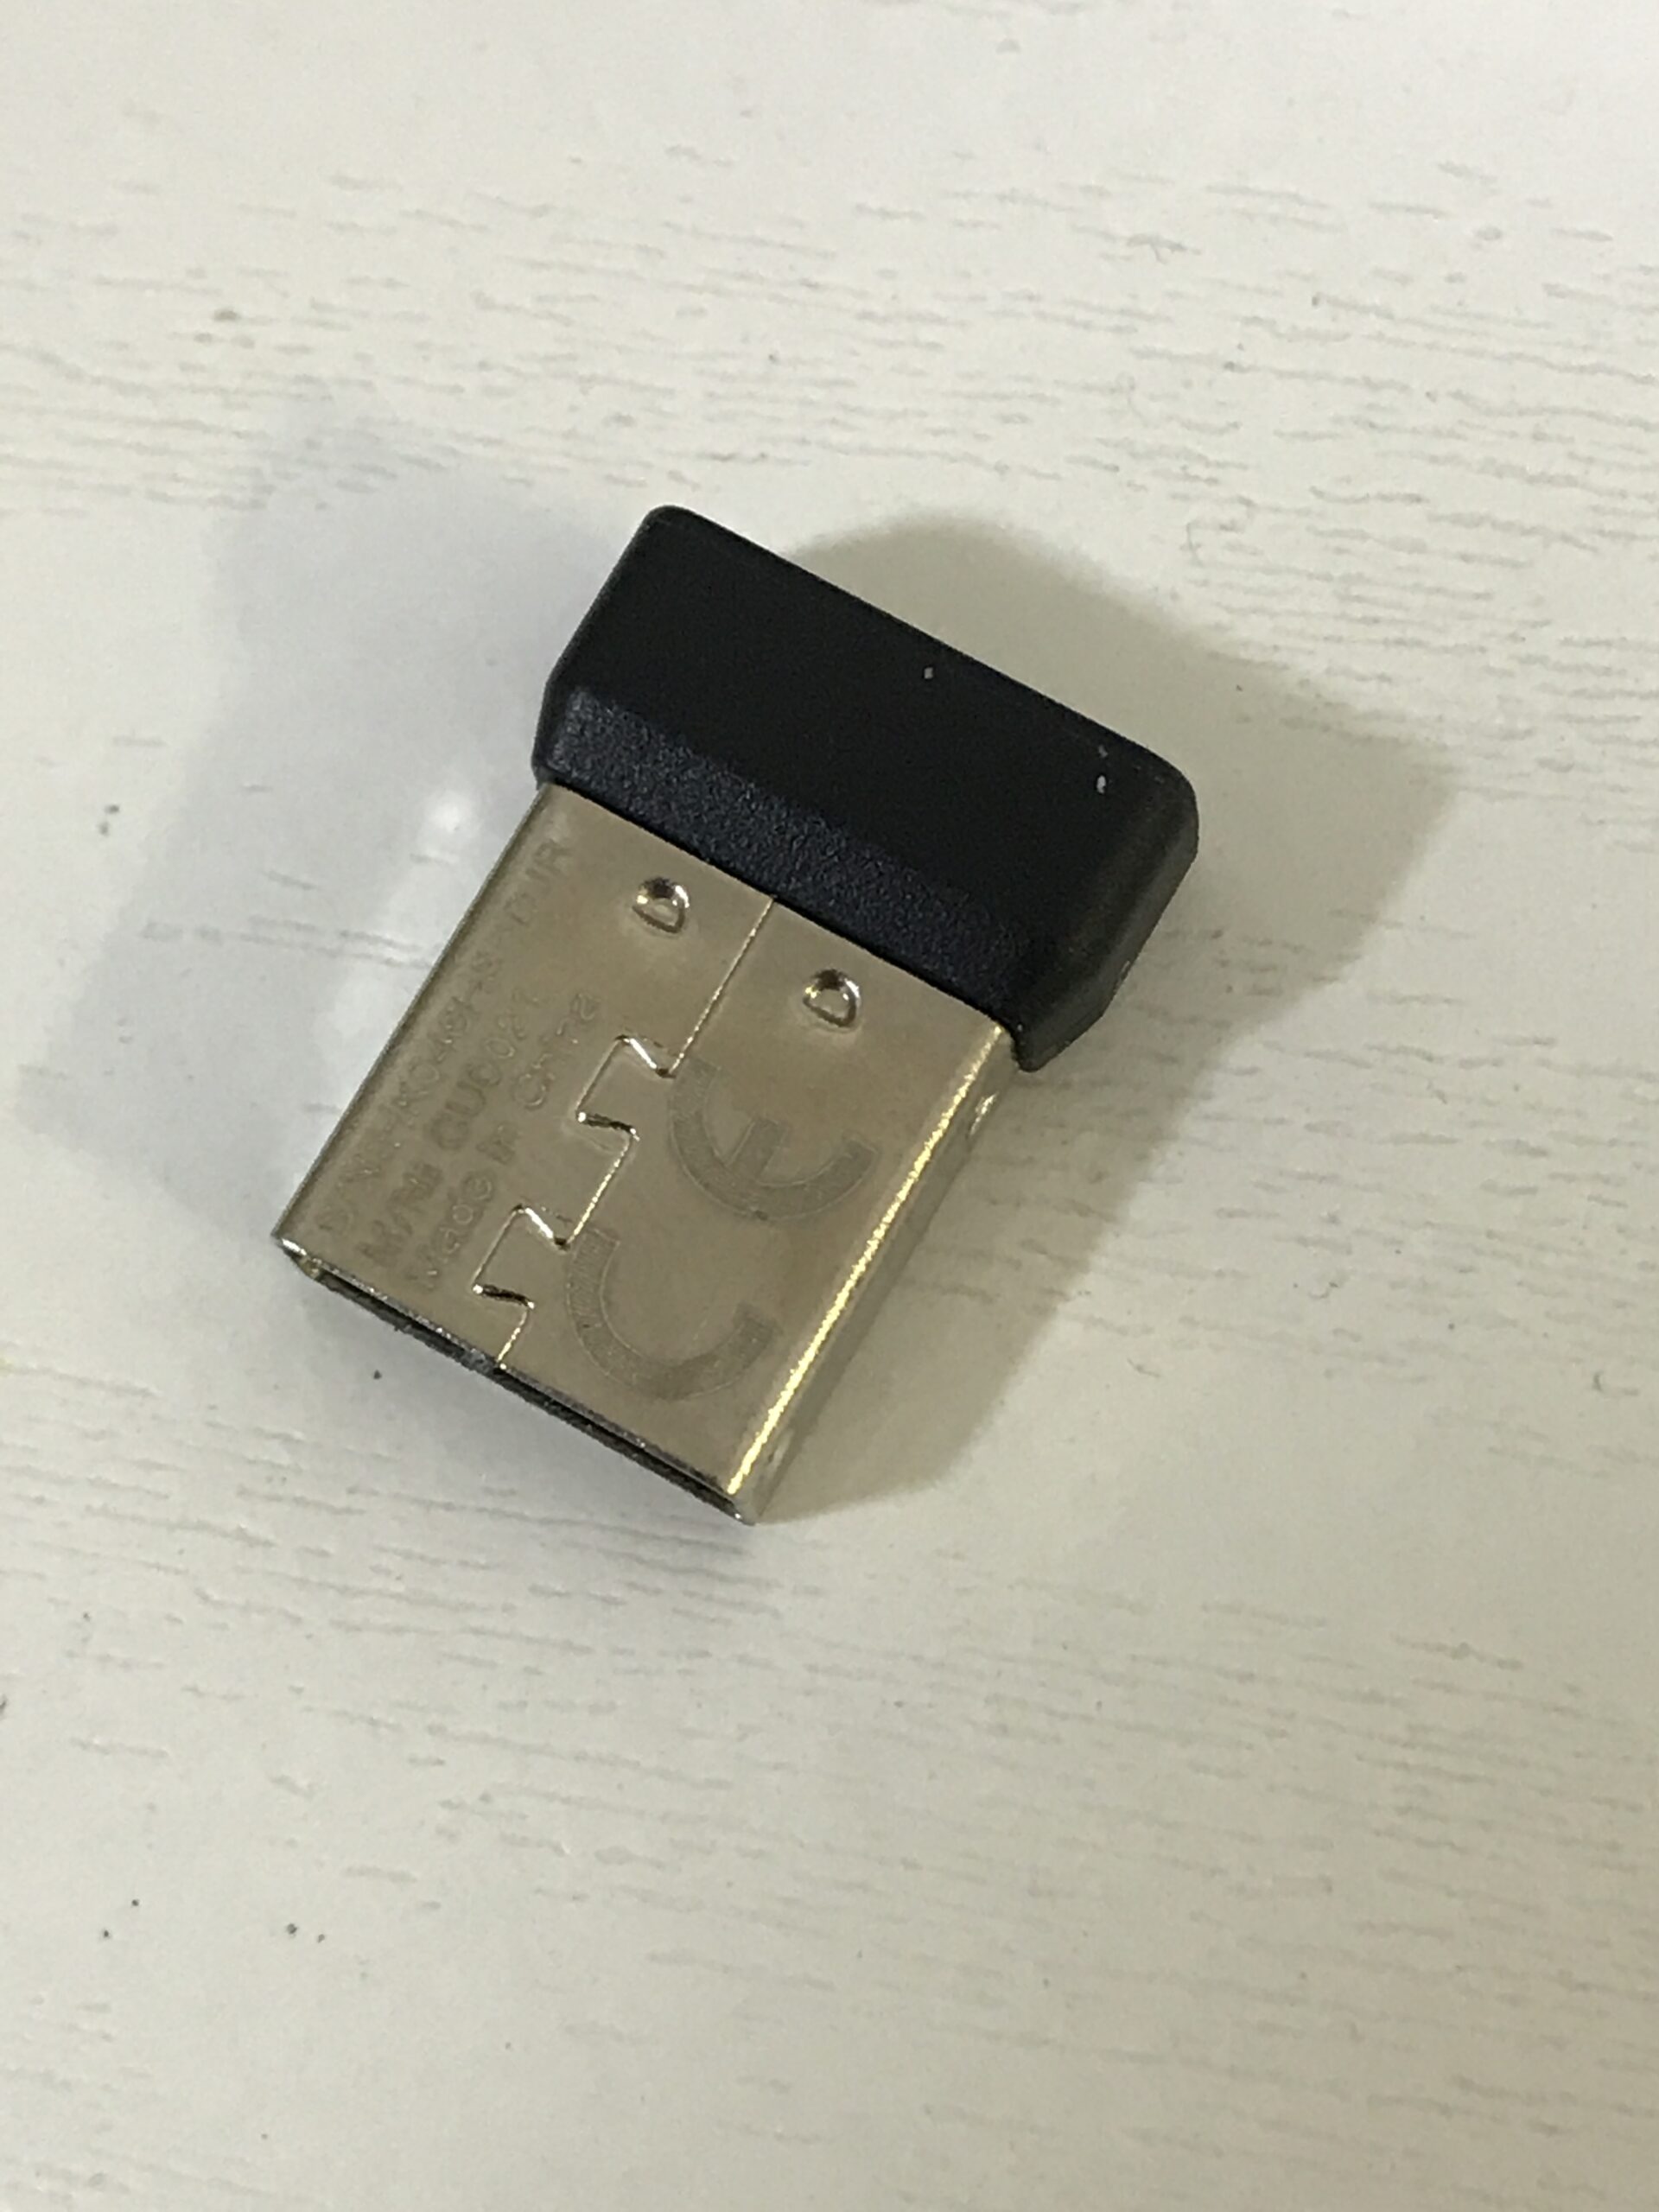 USBレシーバー